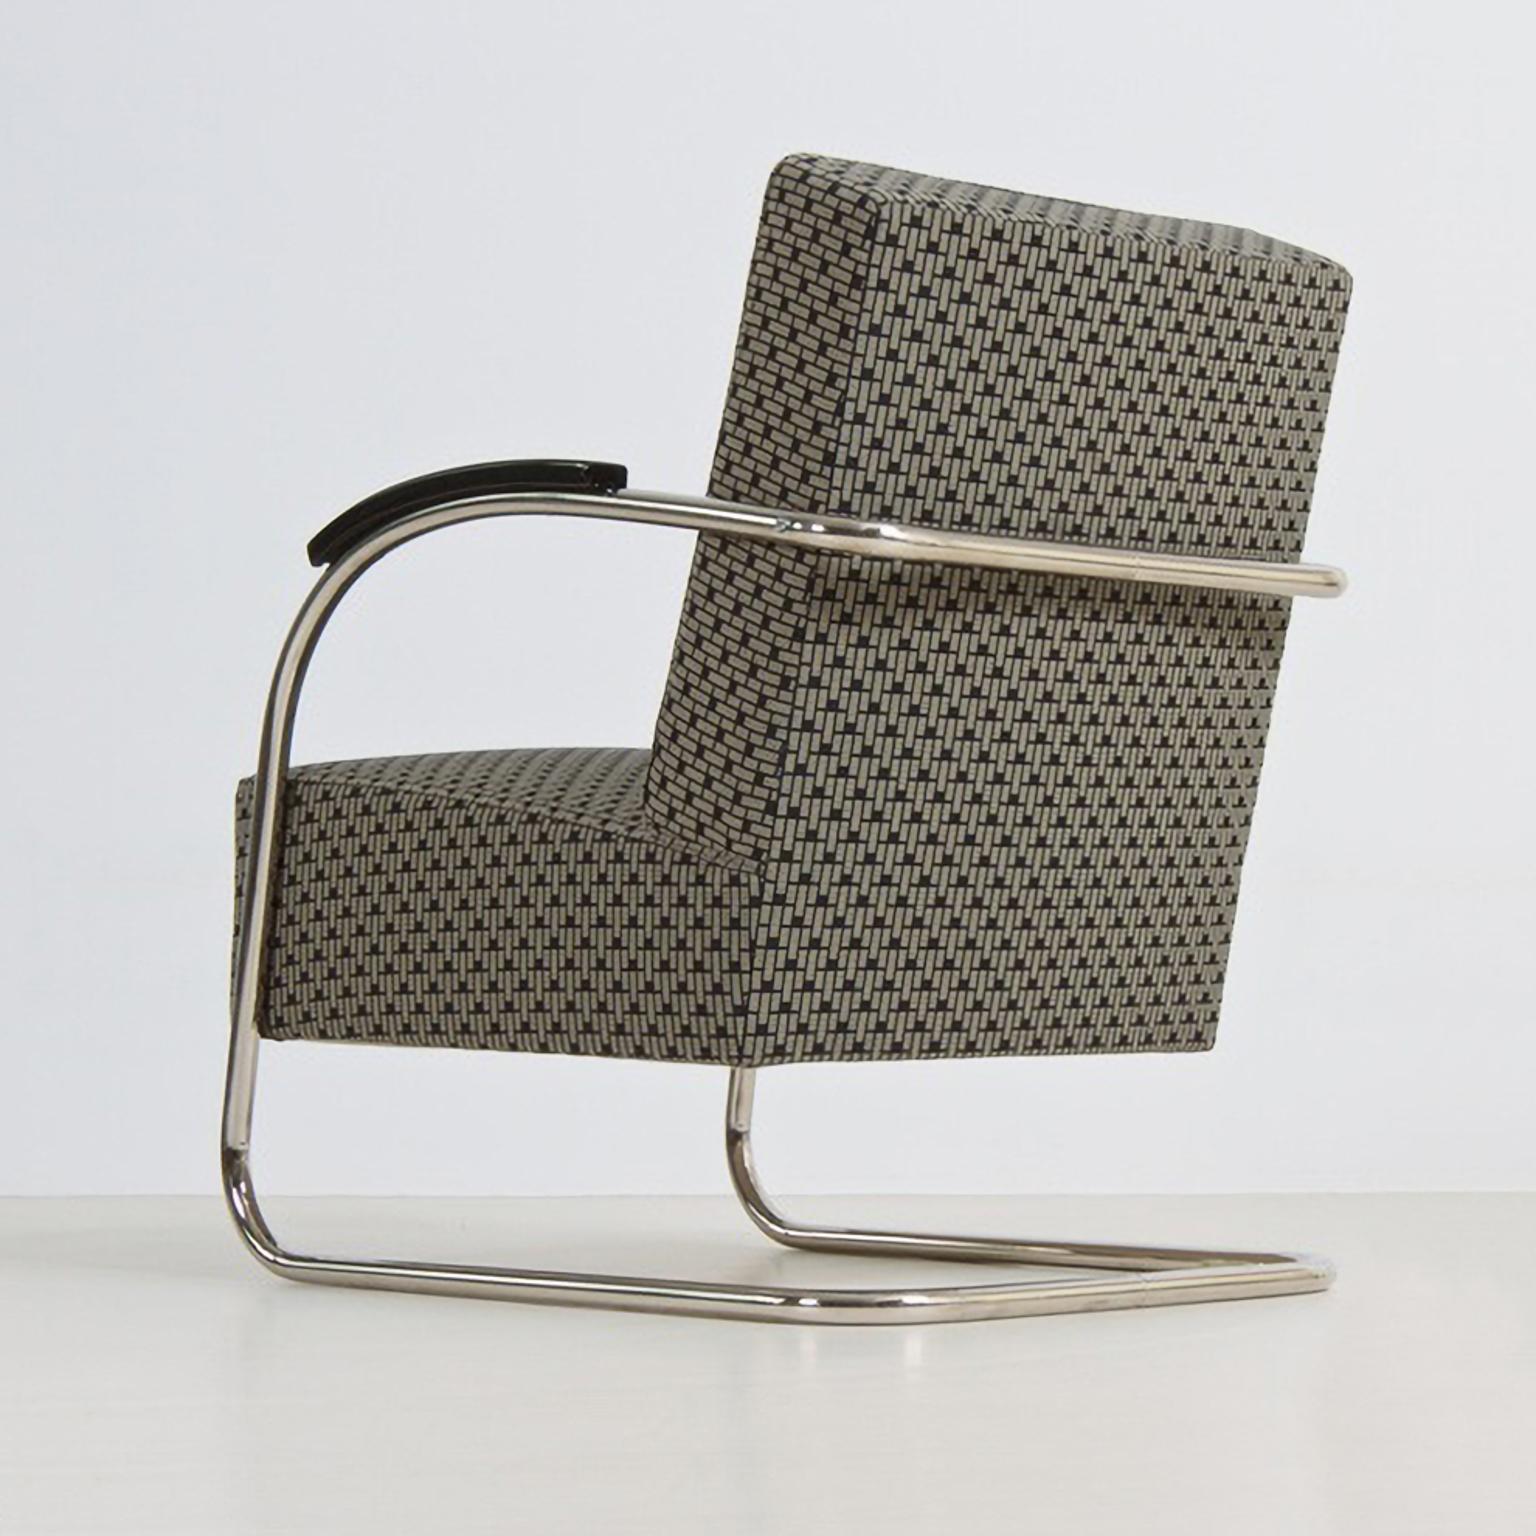 Czech Bespoke Modernist Tubular Steel Armchair, Fabric/ Leather Upholstery c. 1930 For Sale